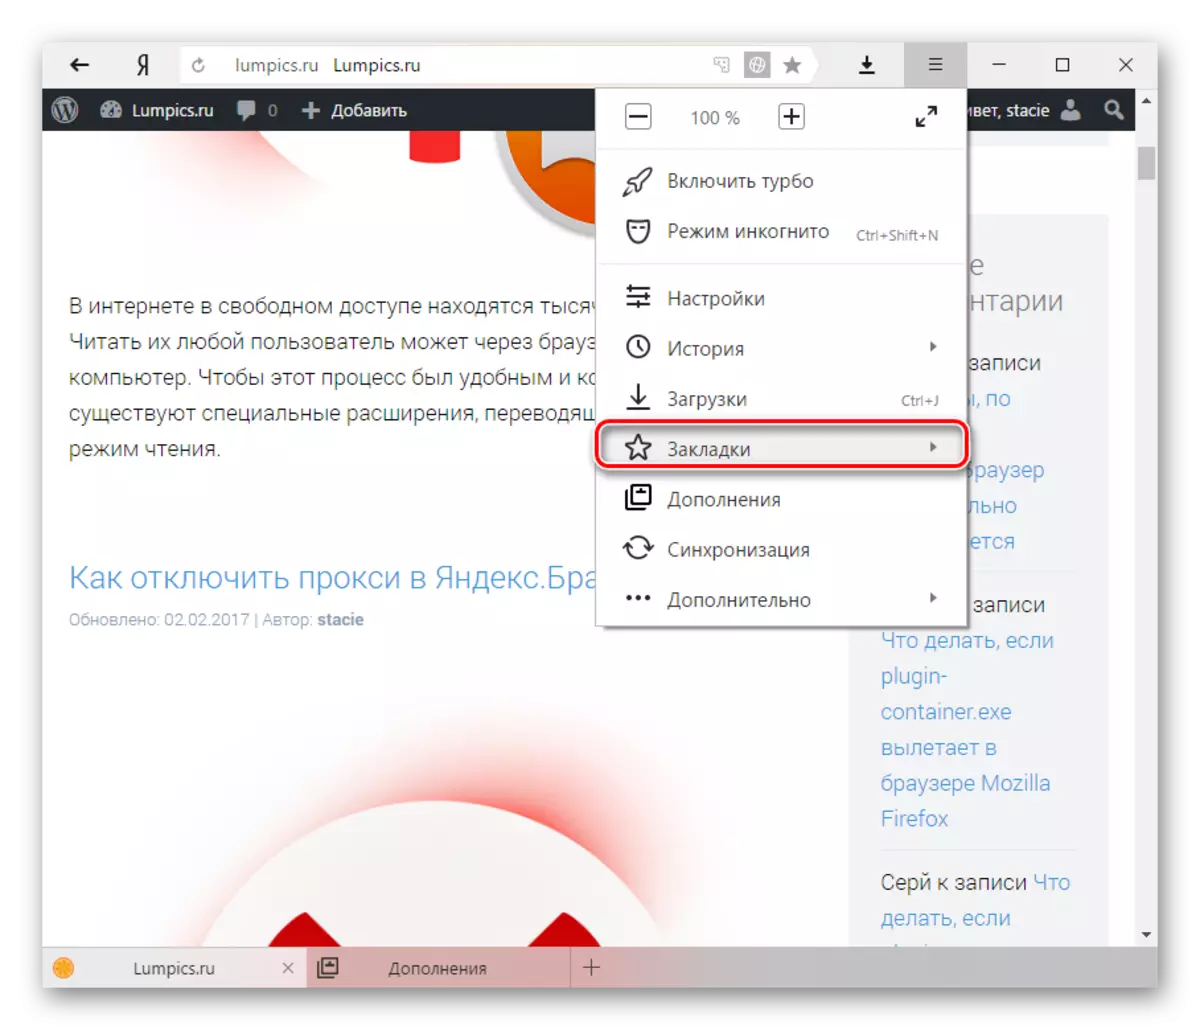 Yandex.browserのブックマーク